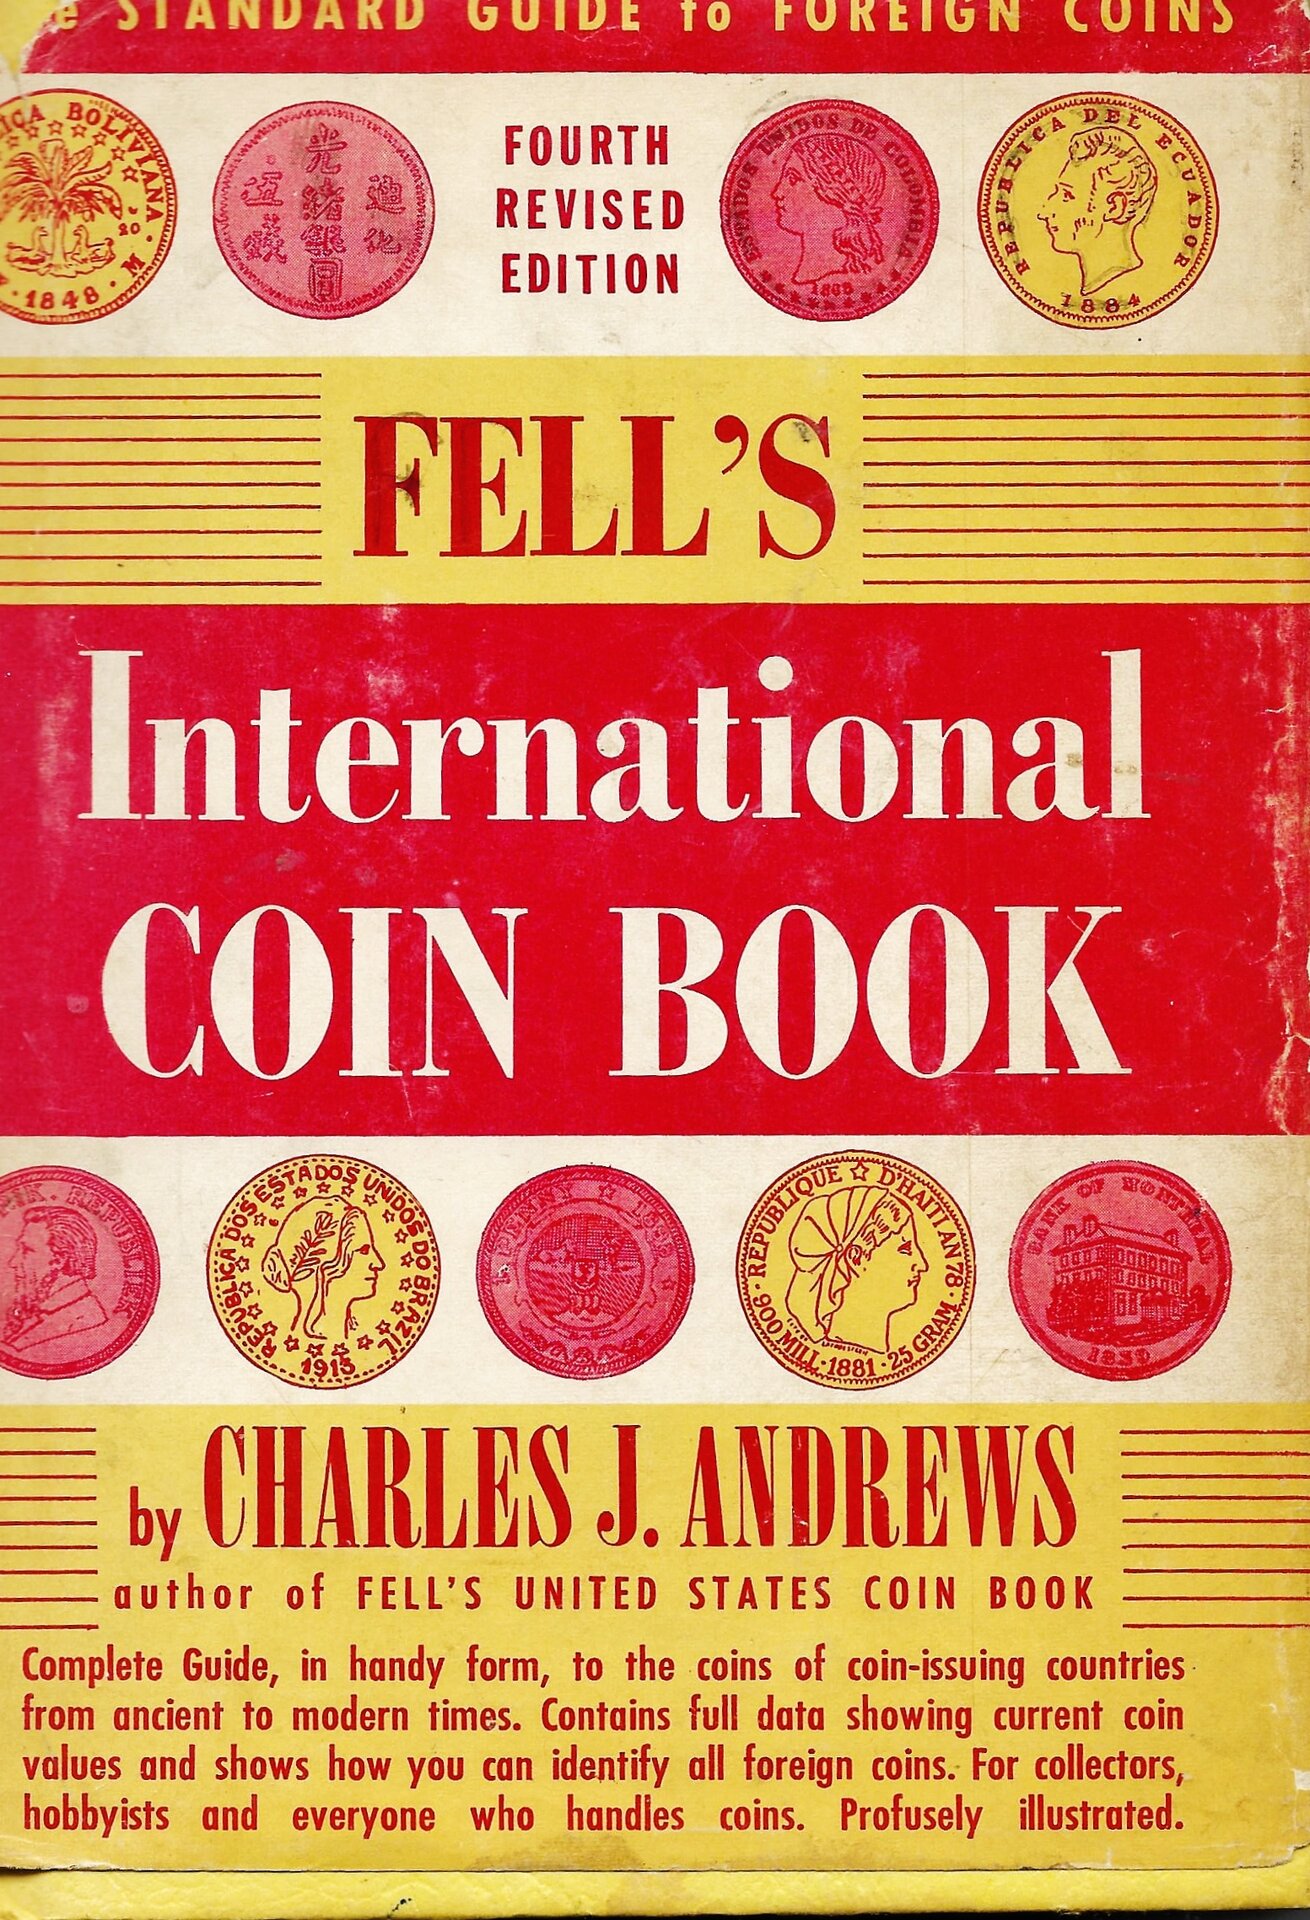 Fells Intl Coin Book 1964 cover.jpg